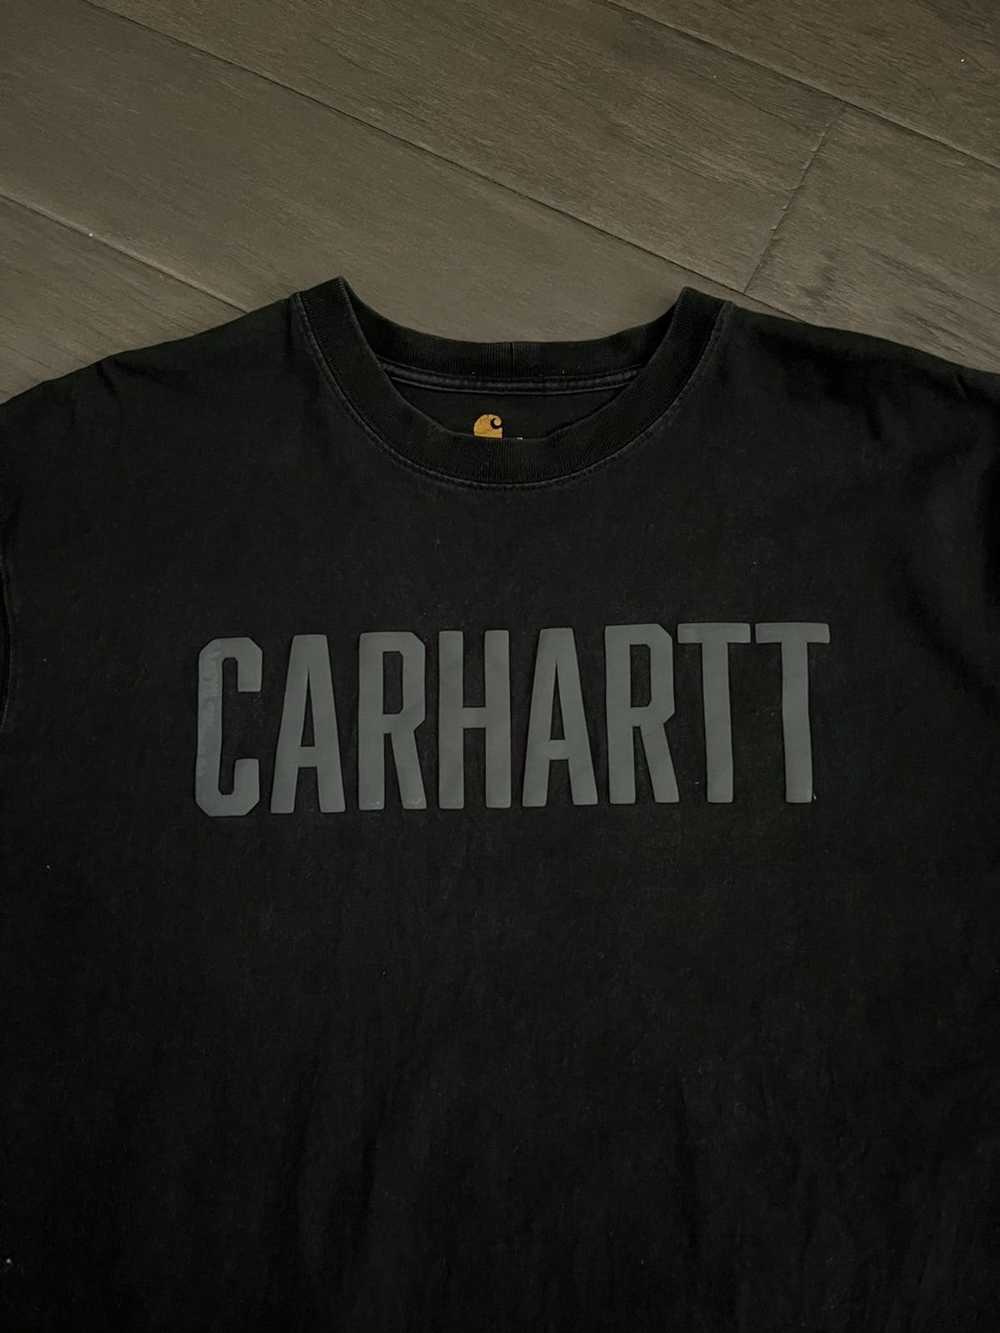 Carhartt Carhartt shirt black grey - image 2